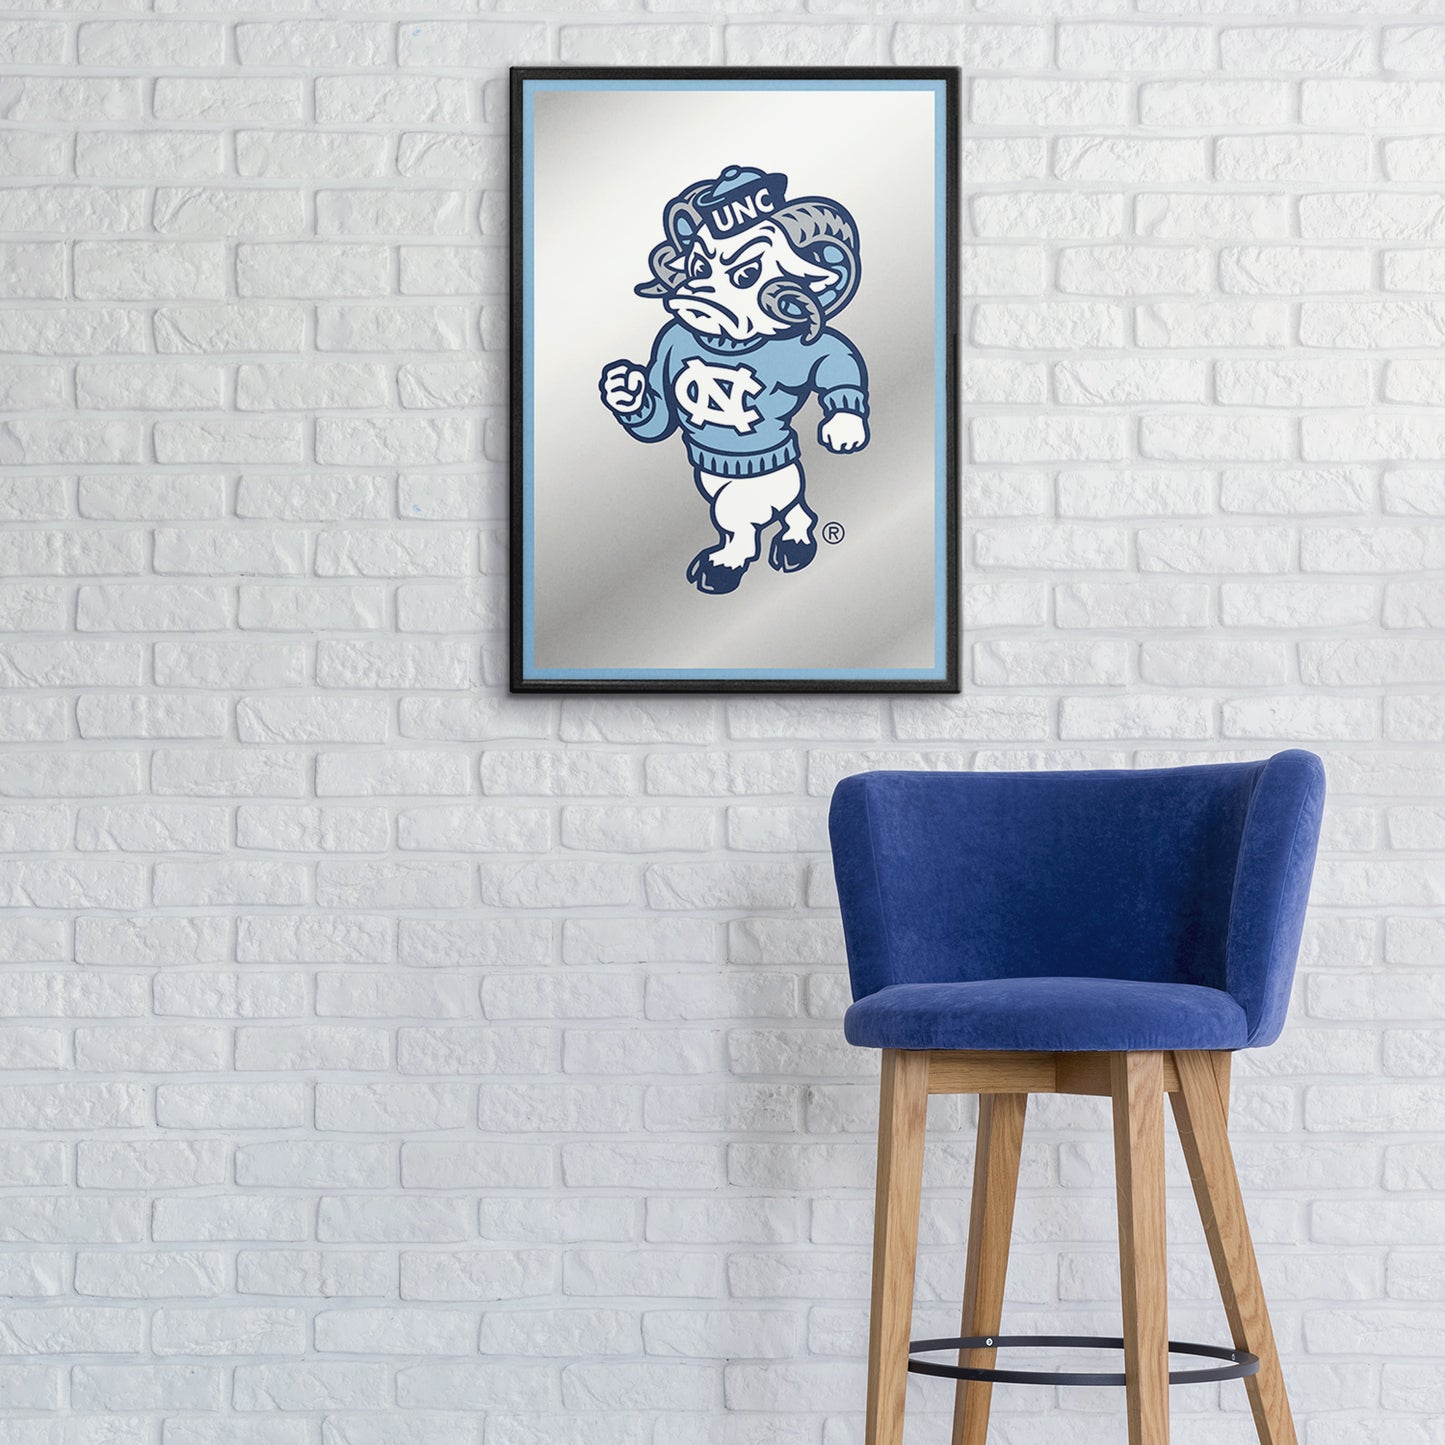 North Carolina Tar Heels: Mascot - Framed Mirrored Wall Sign Carolina Blue Edge